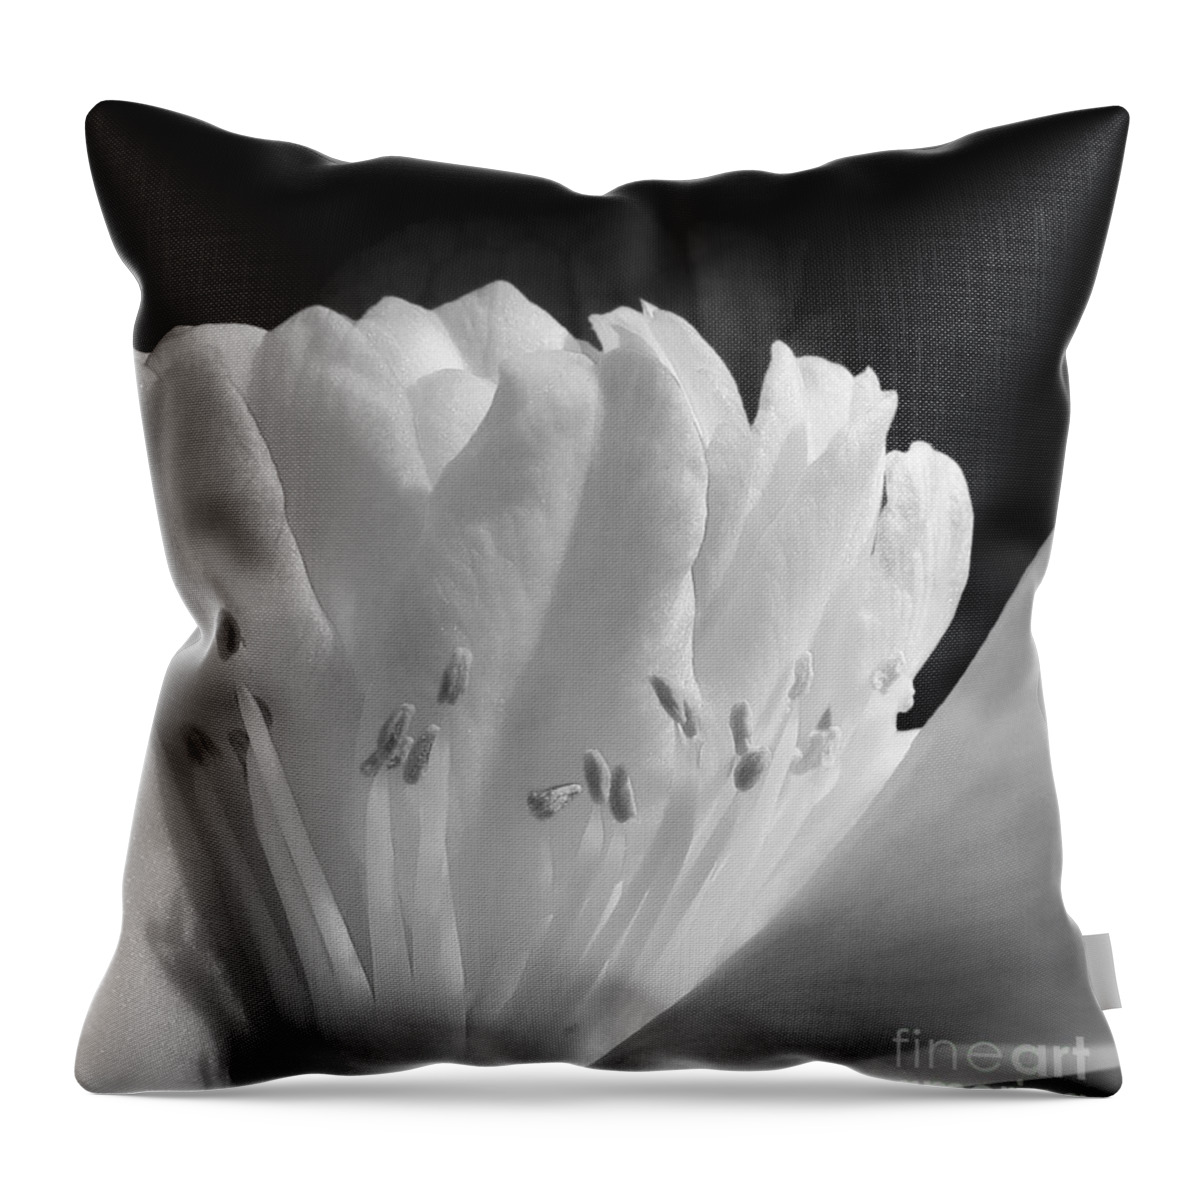 Monochrome Throw Pillow featuring the photograph Winter Camellia by Deborah Smith